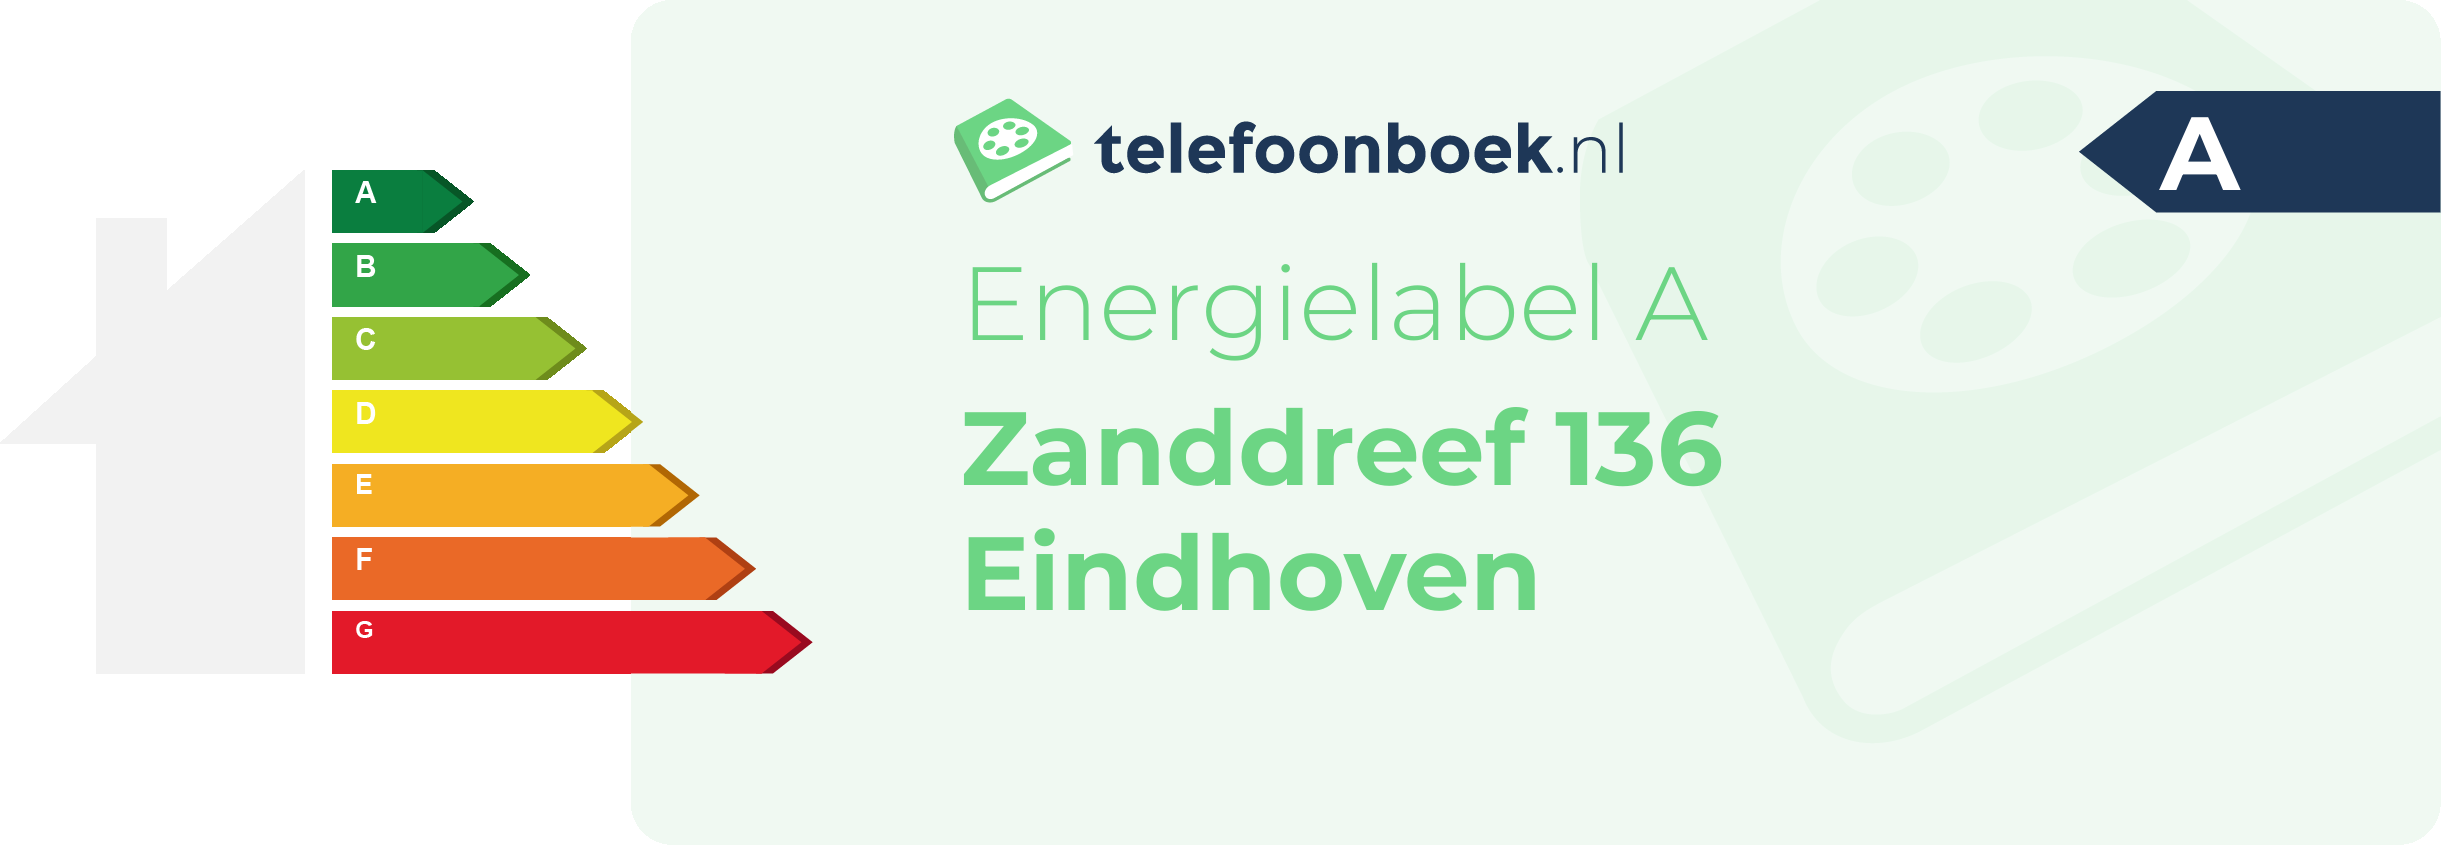 Energielabel Zanddreef 136 Eindhoven